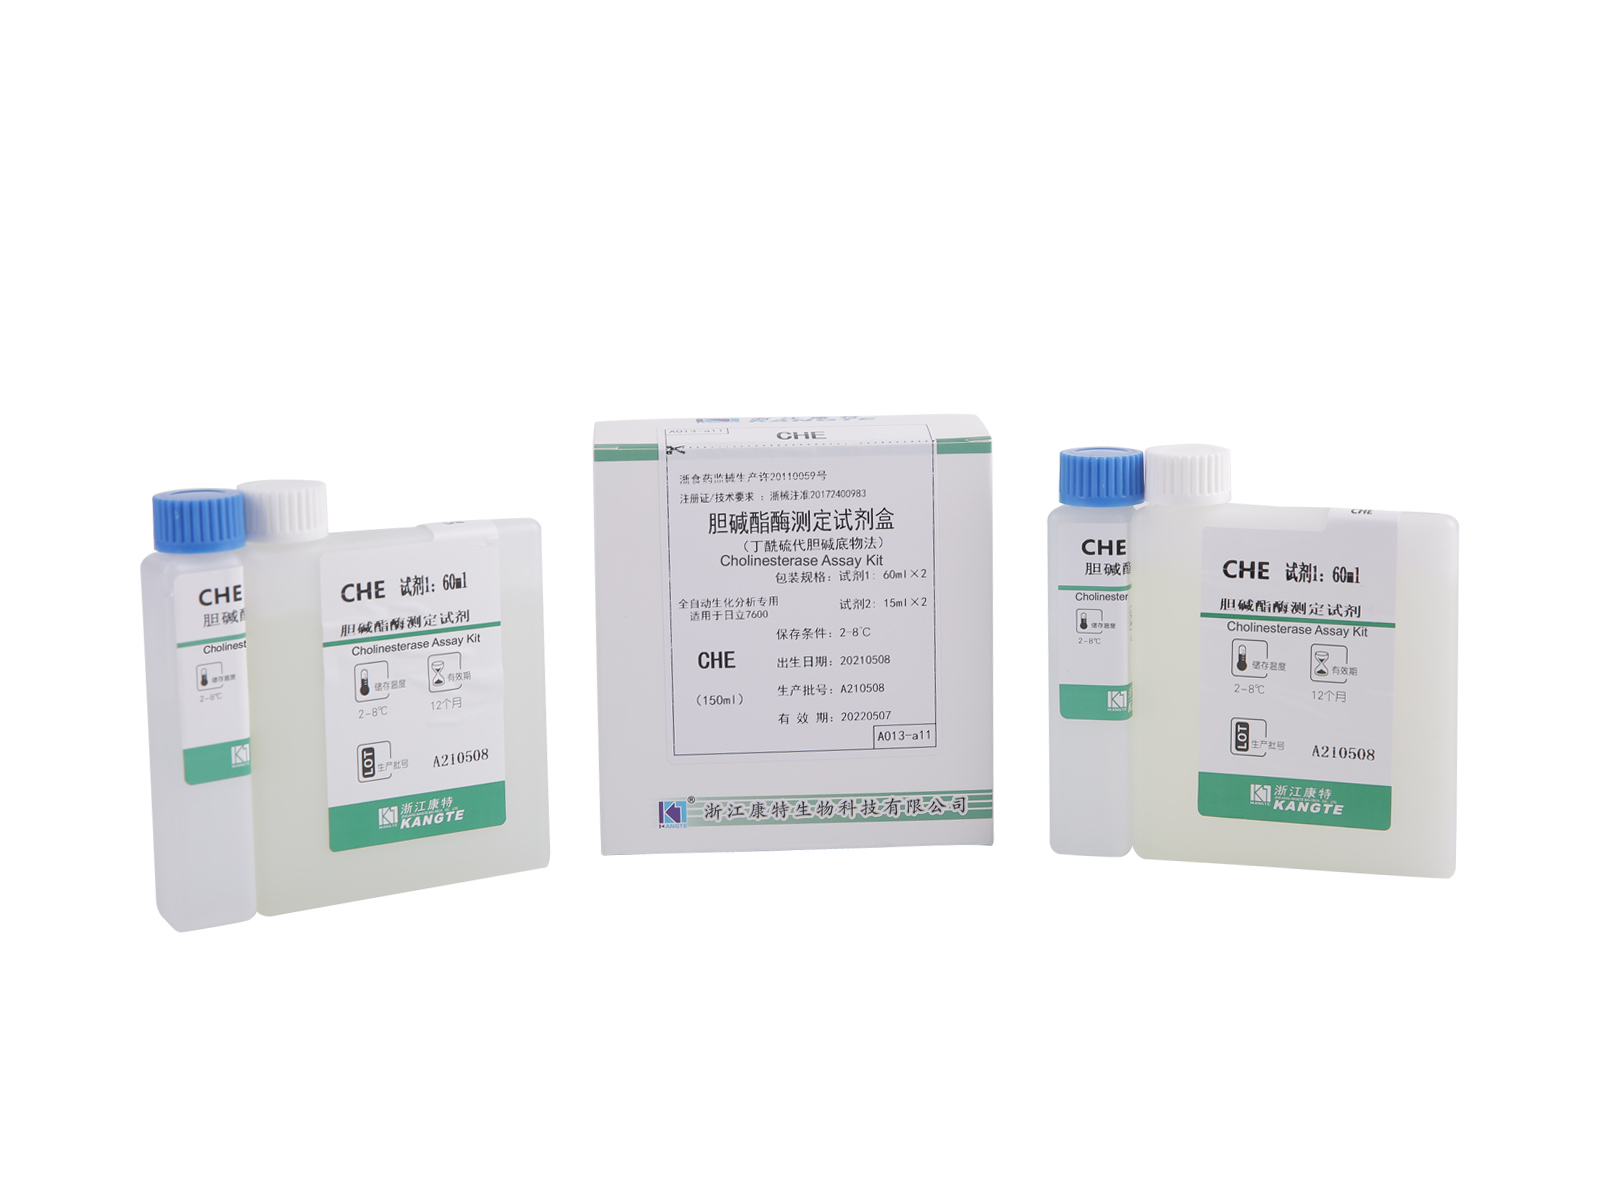 【CHE】Komplet za analizu kolinesteraze (metoda supstrata butiriltiokolina)